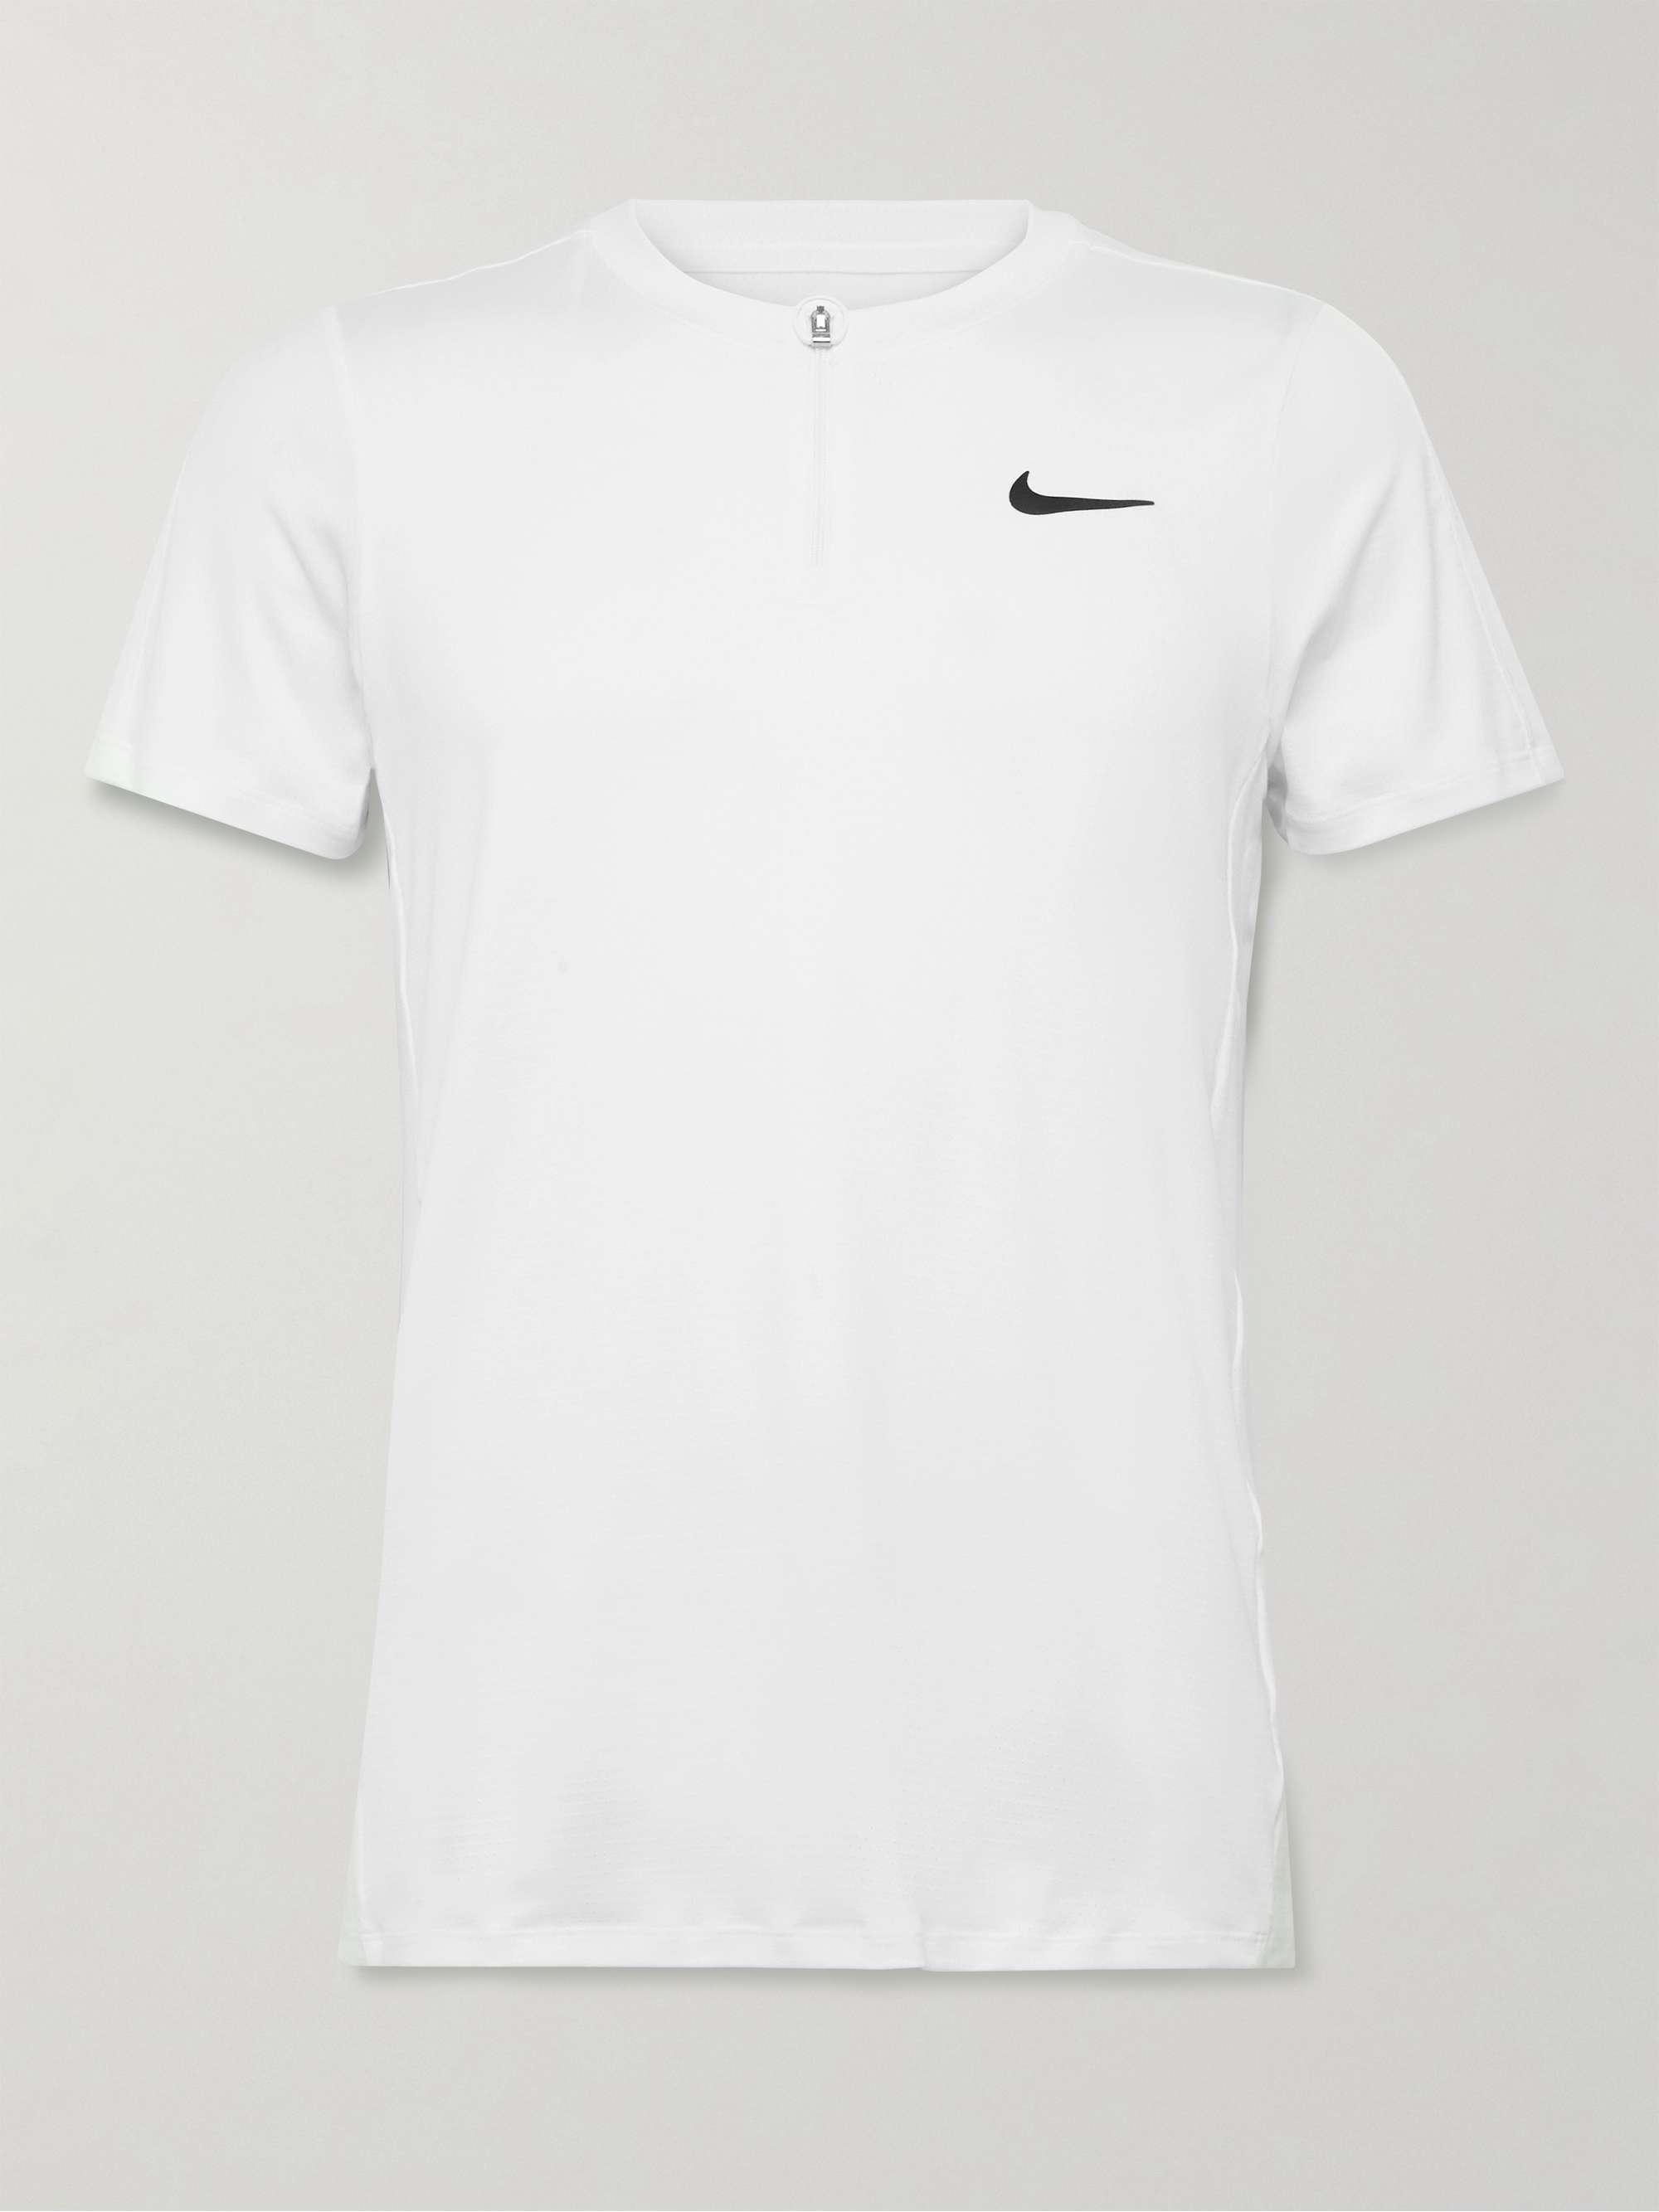 NIKE TENNIS NikeCourt Advantage Slim-Fit Dri-FIT Mesh Half-Zip Tennis T- Shirt for Men | MR PORTER